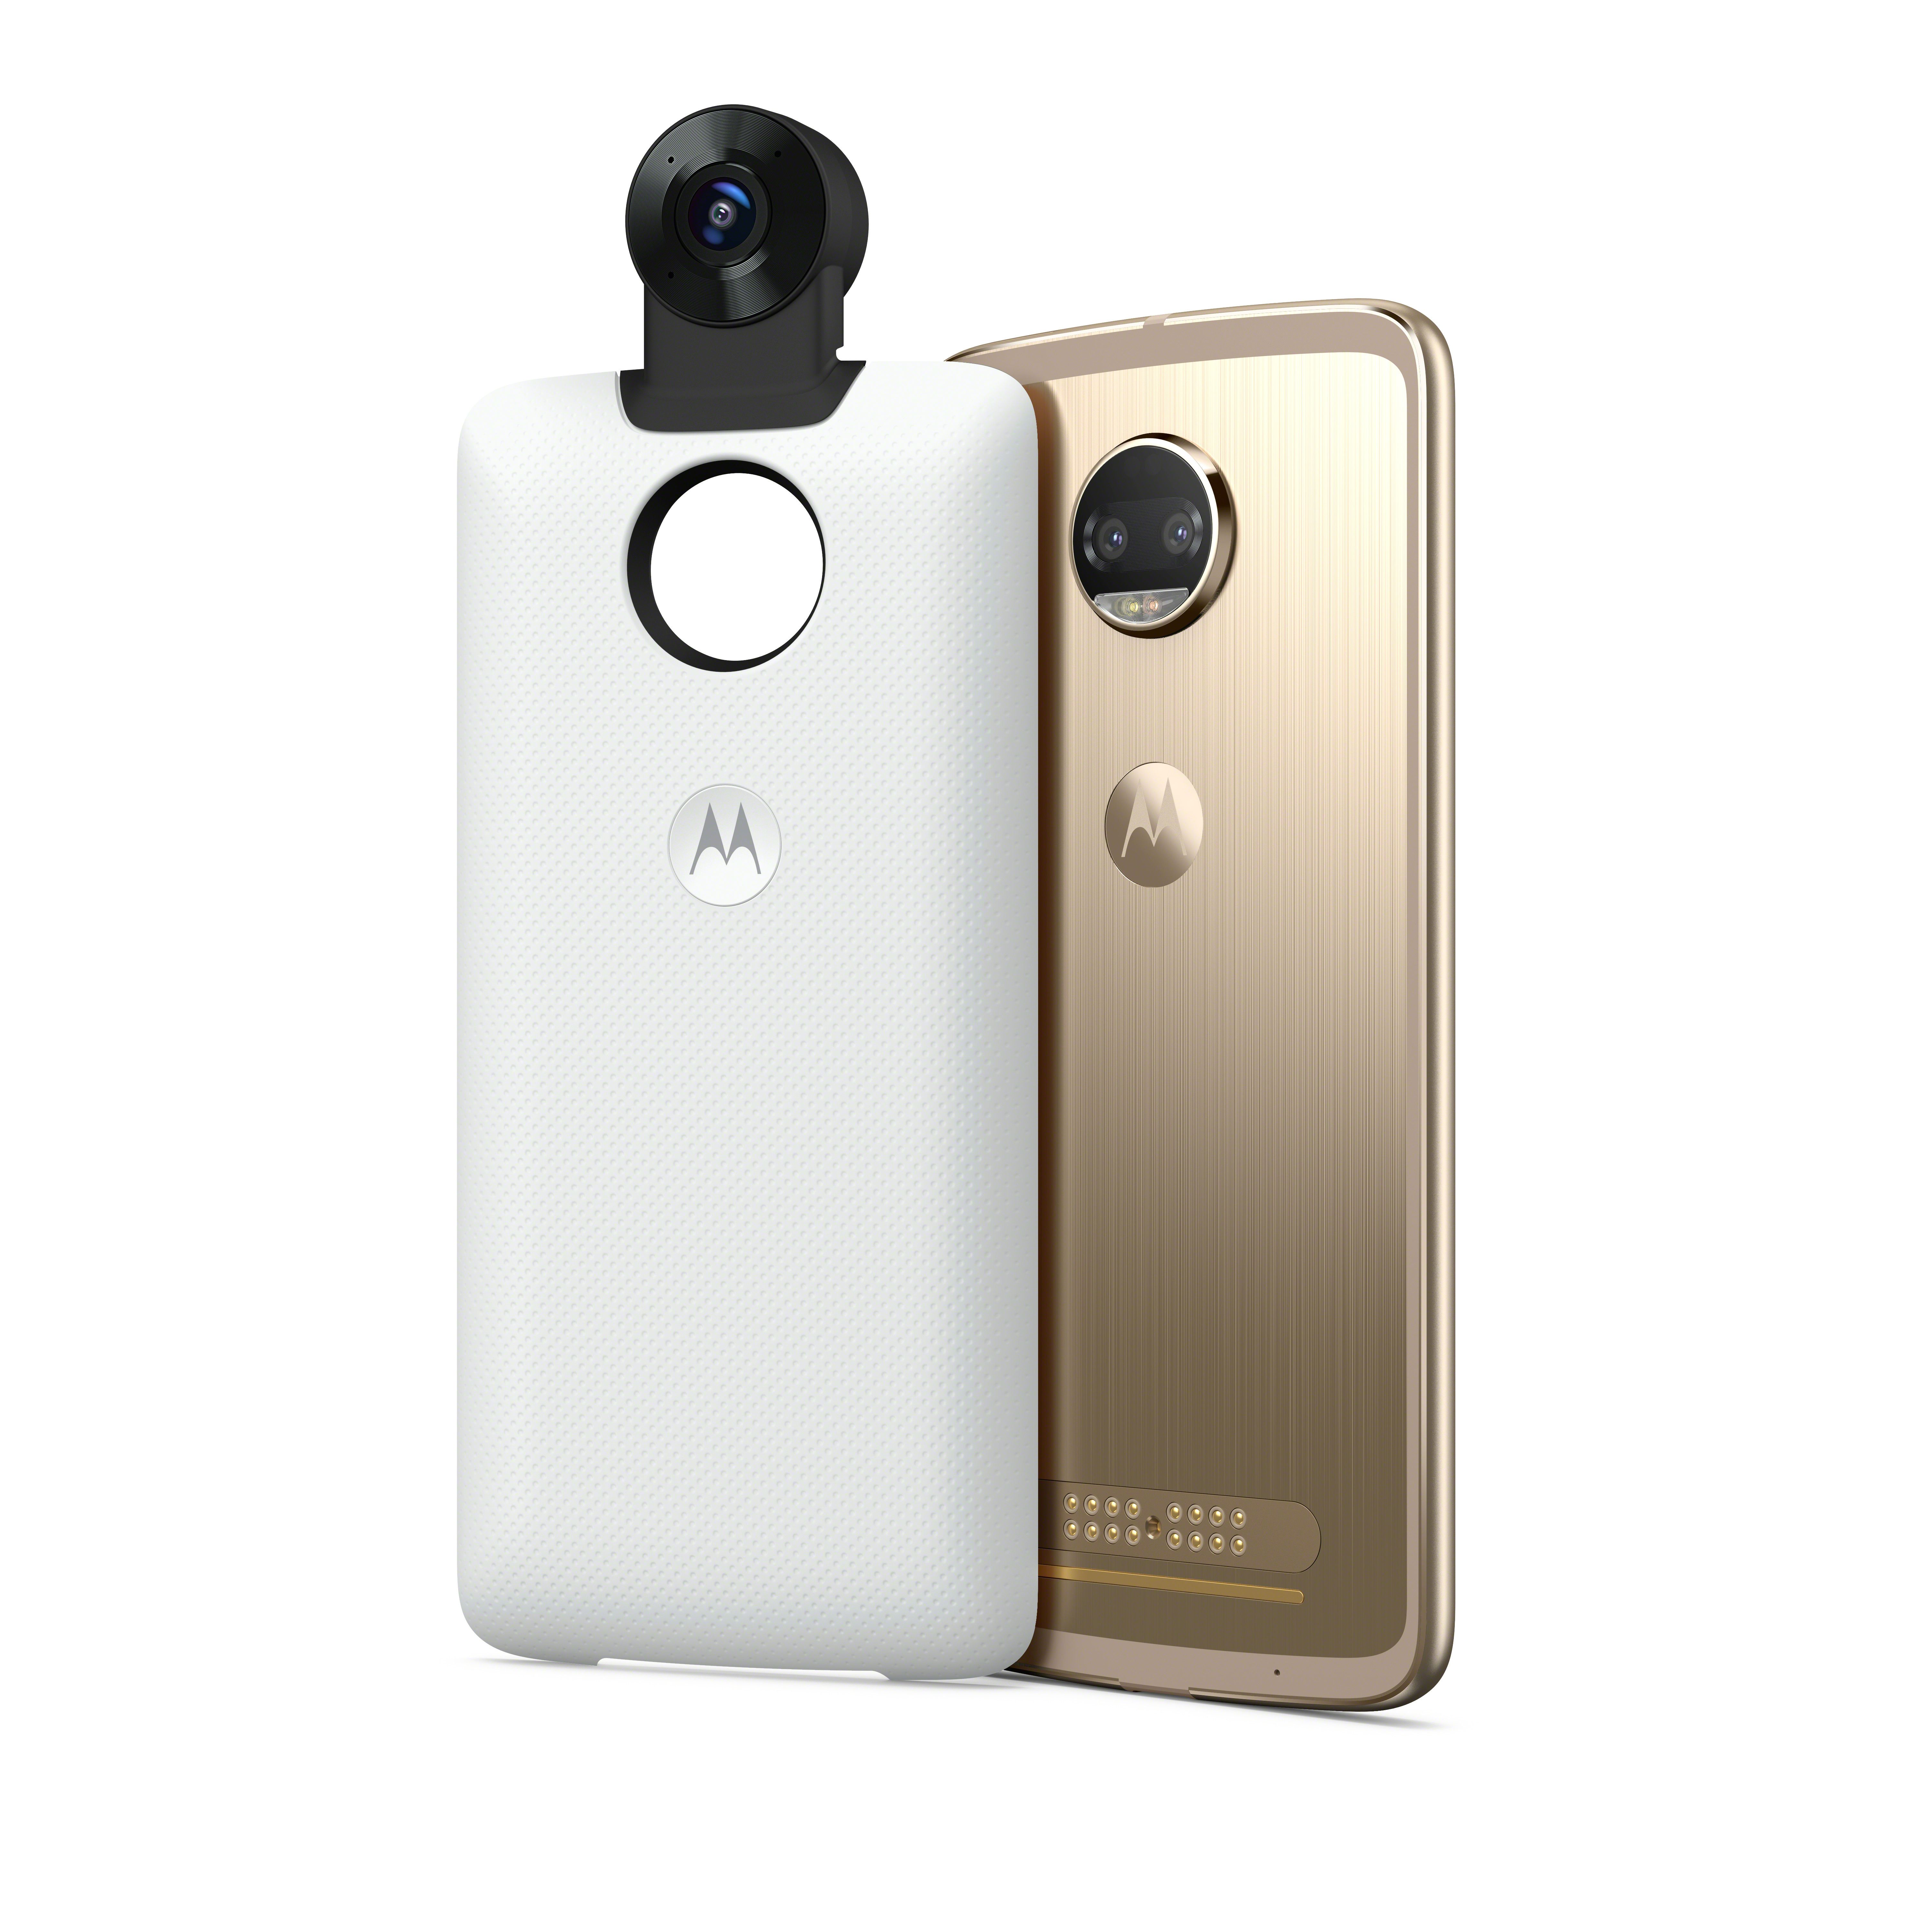 De Moto 360 Camera Mod naast de Moto Z2 Force Edition-smartphone